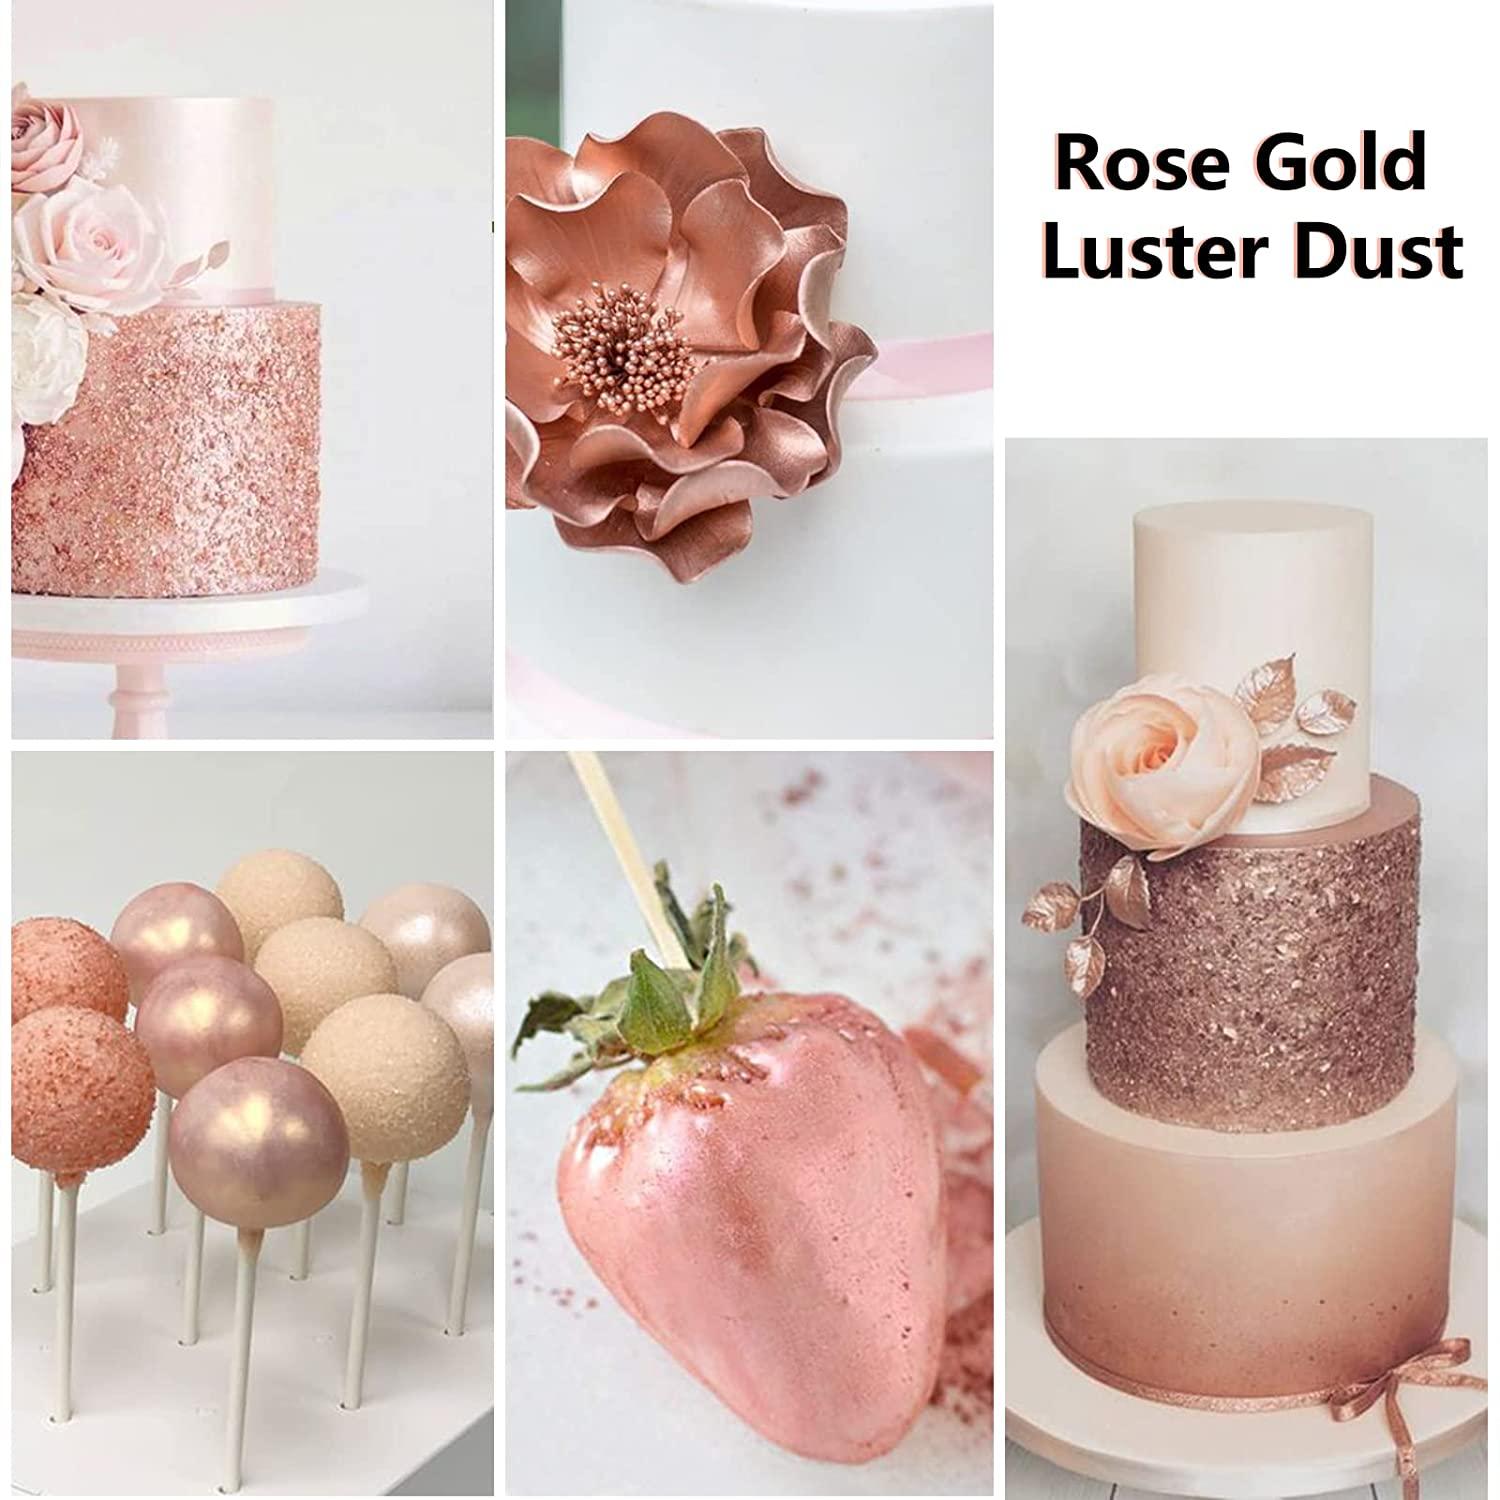 Shanlinly Rose Gold Luster Dust Edible Set - 3G Food Grade Rose Gold Cake Dust Shimmer Powdered, Vegan Gold Edible Metallic Powder Food Coloring for Cake